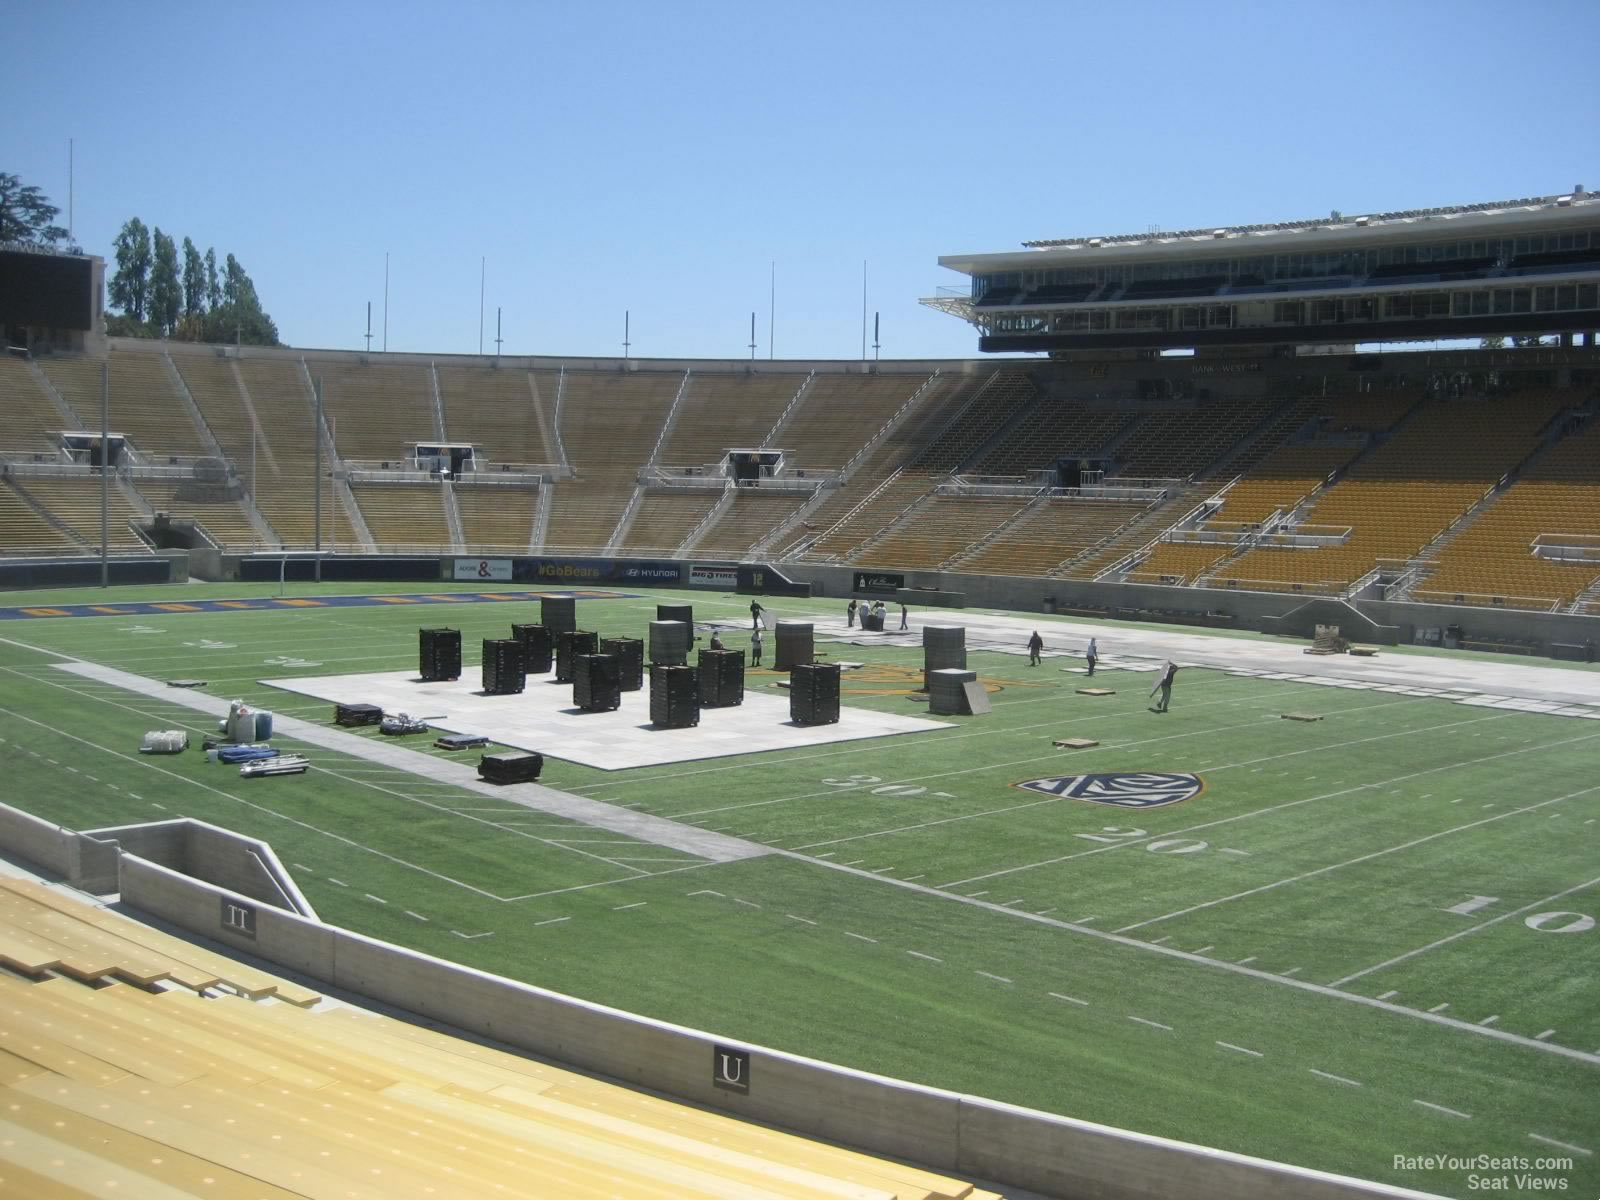 section uu, row 22 seat view  - memorial stadium (cal)